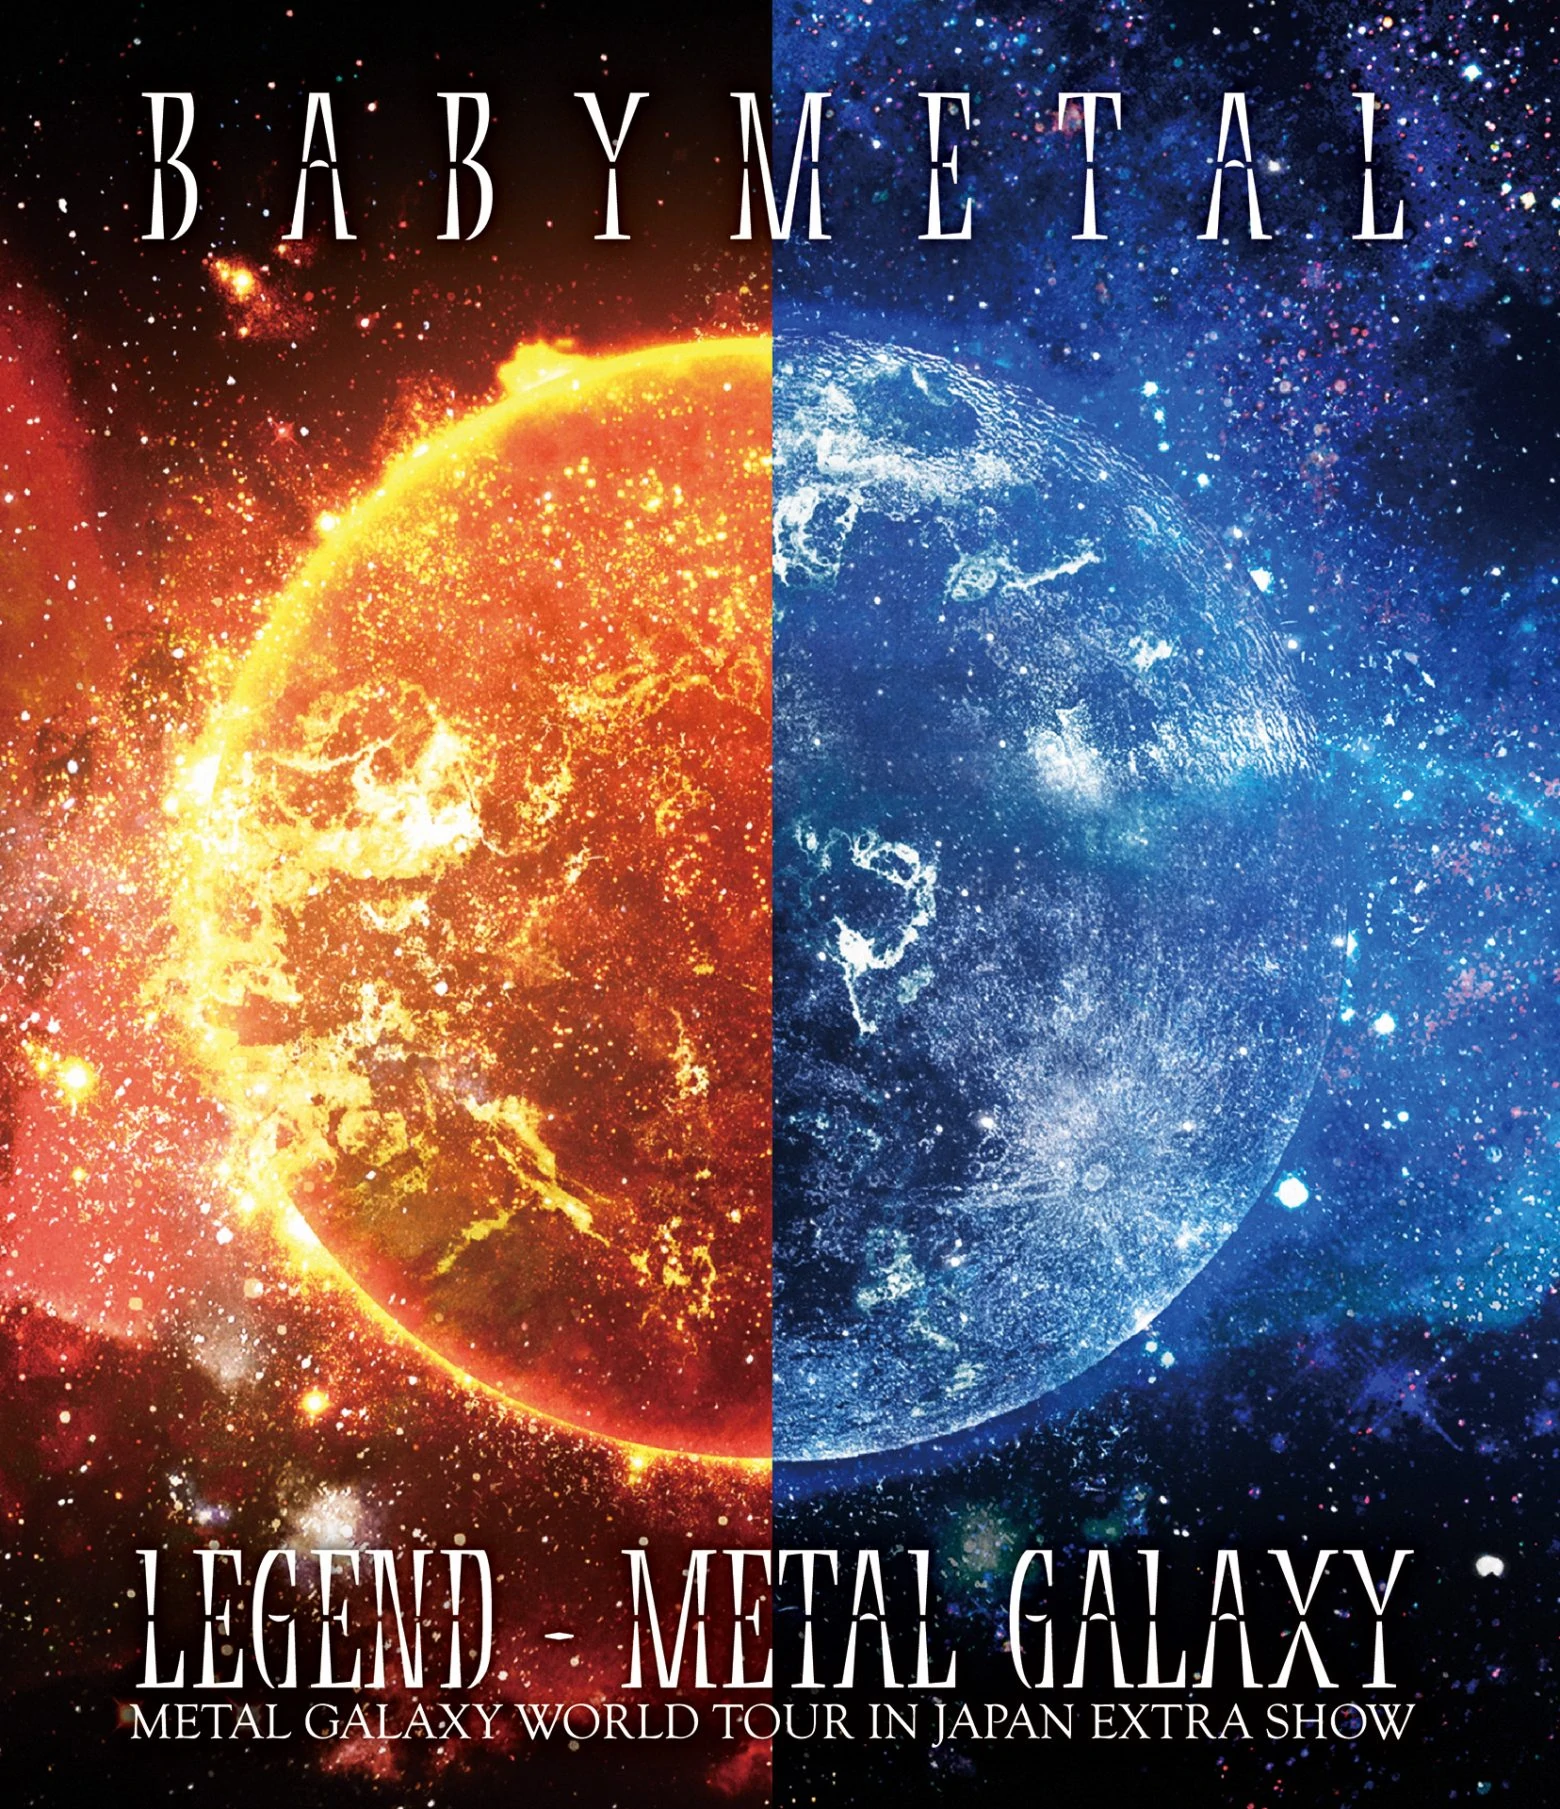 LEGEND - METAL GALAXY | BABYMETAL Wiki | Fandom